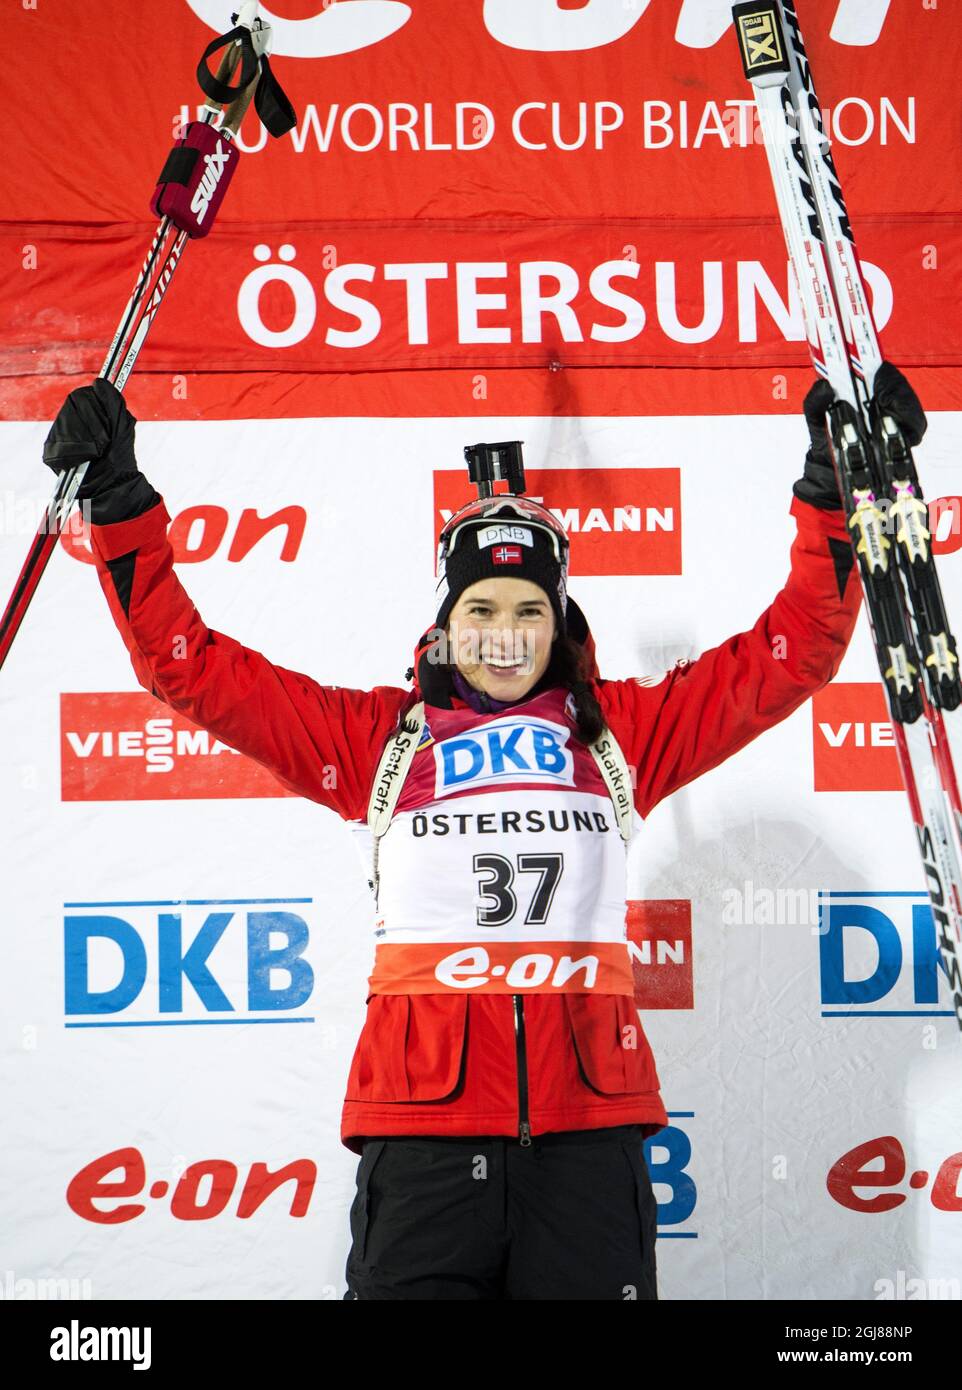 Ann Kristin Flatland of Norway celebrates on the podium after winning the Women's 7,5 km sprint race of the Biathlon World Cup in Ostersund, Sweden, on Nov. 29, 2013. Photo: Pontus Lundahl / TT / code 10050  Stock Photo